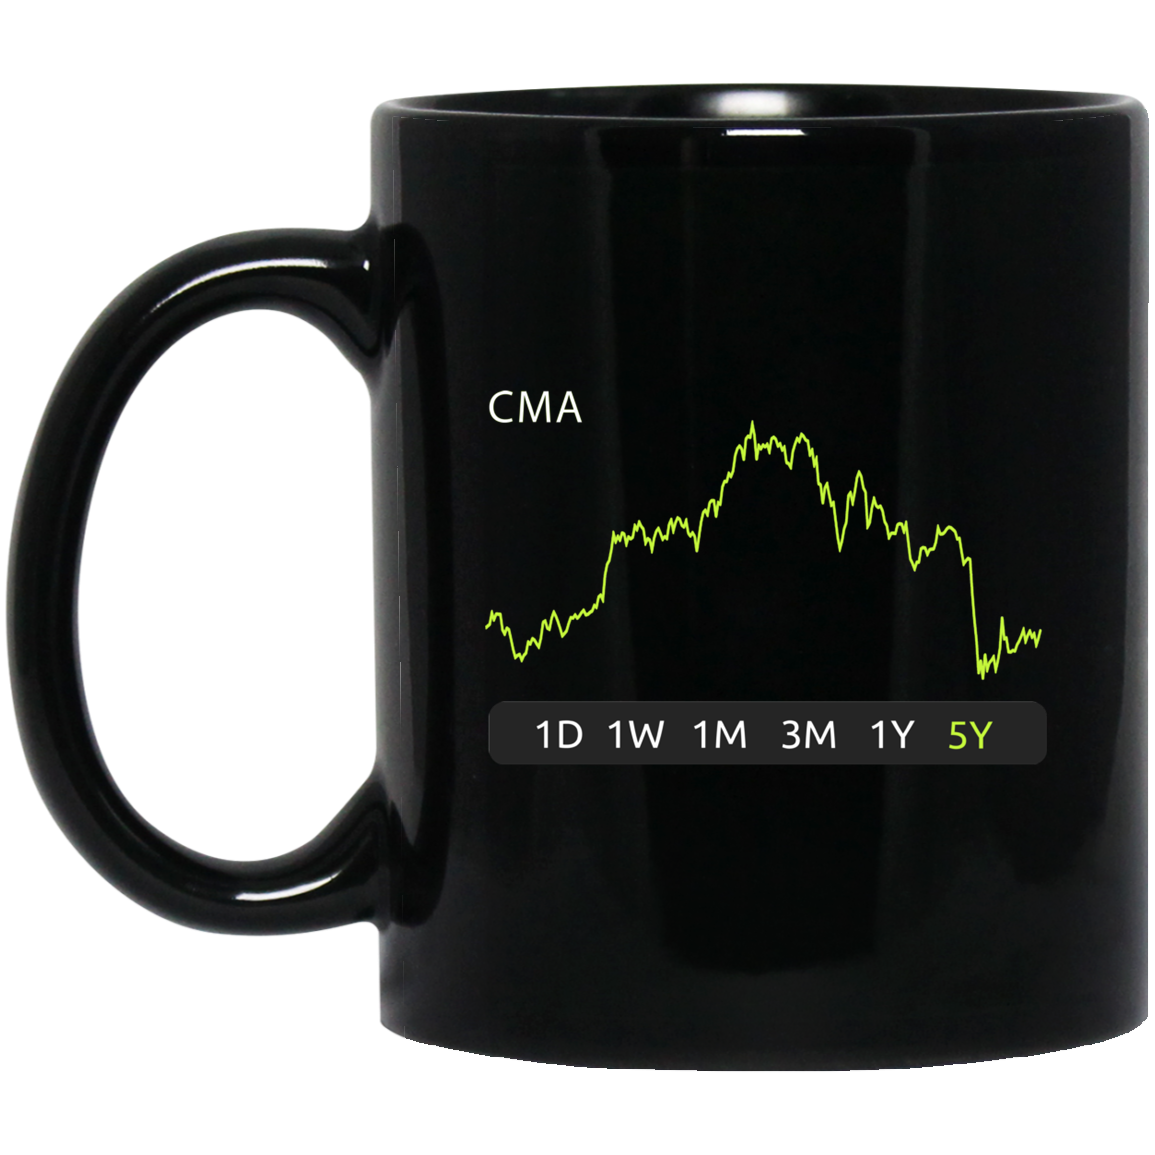 CMA Stock 5y Mug